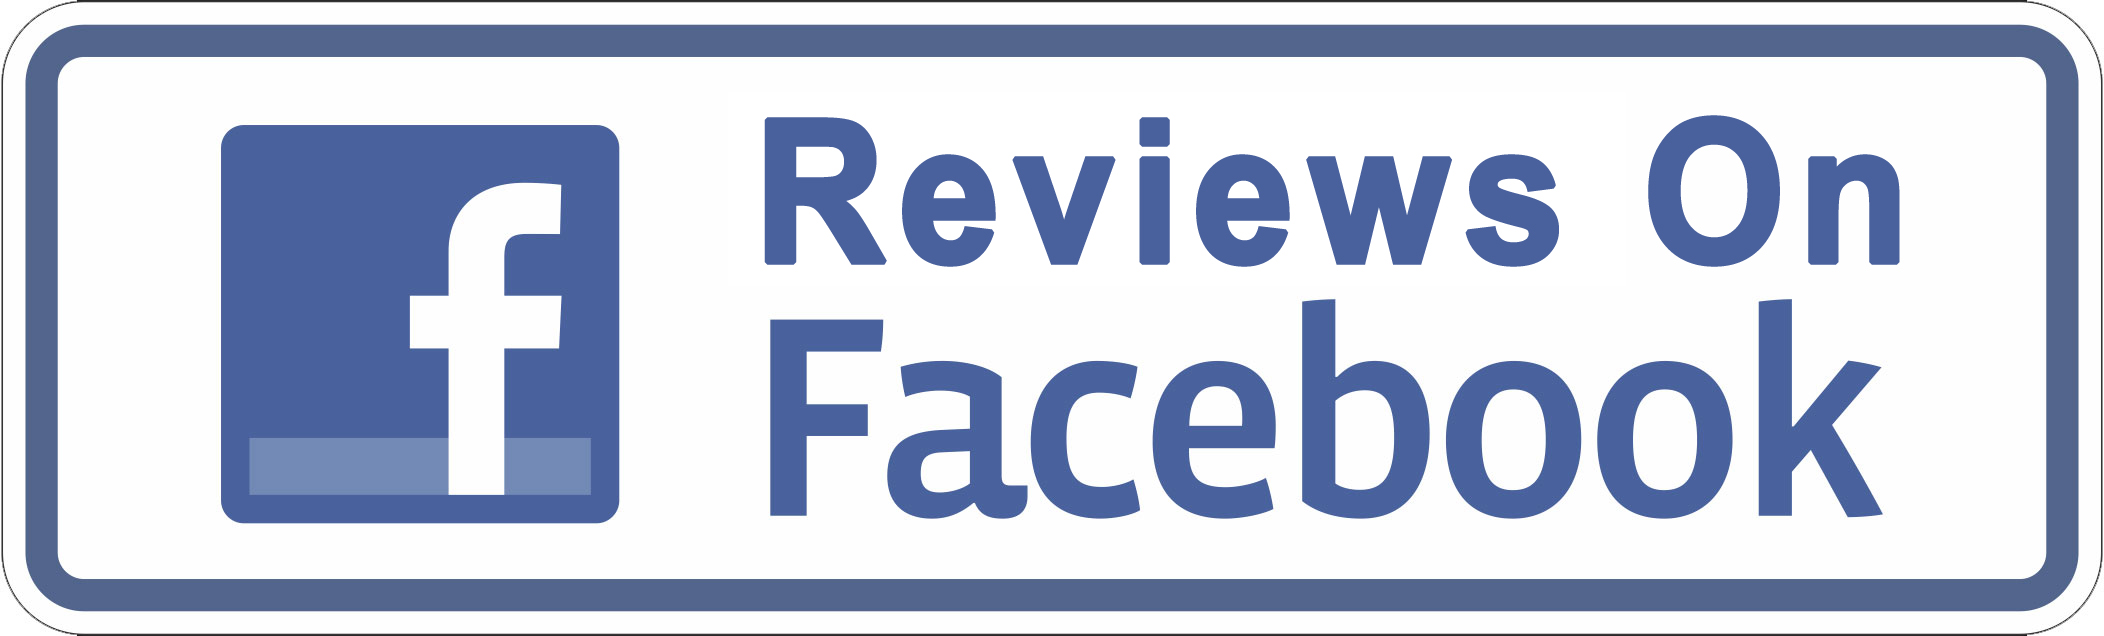 facebook review app